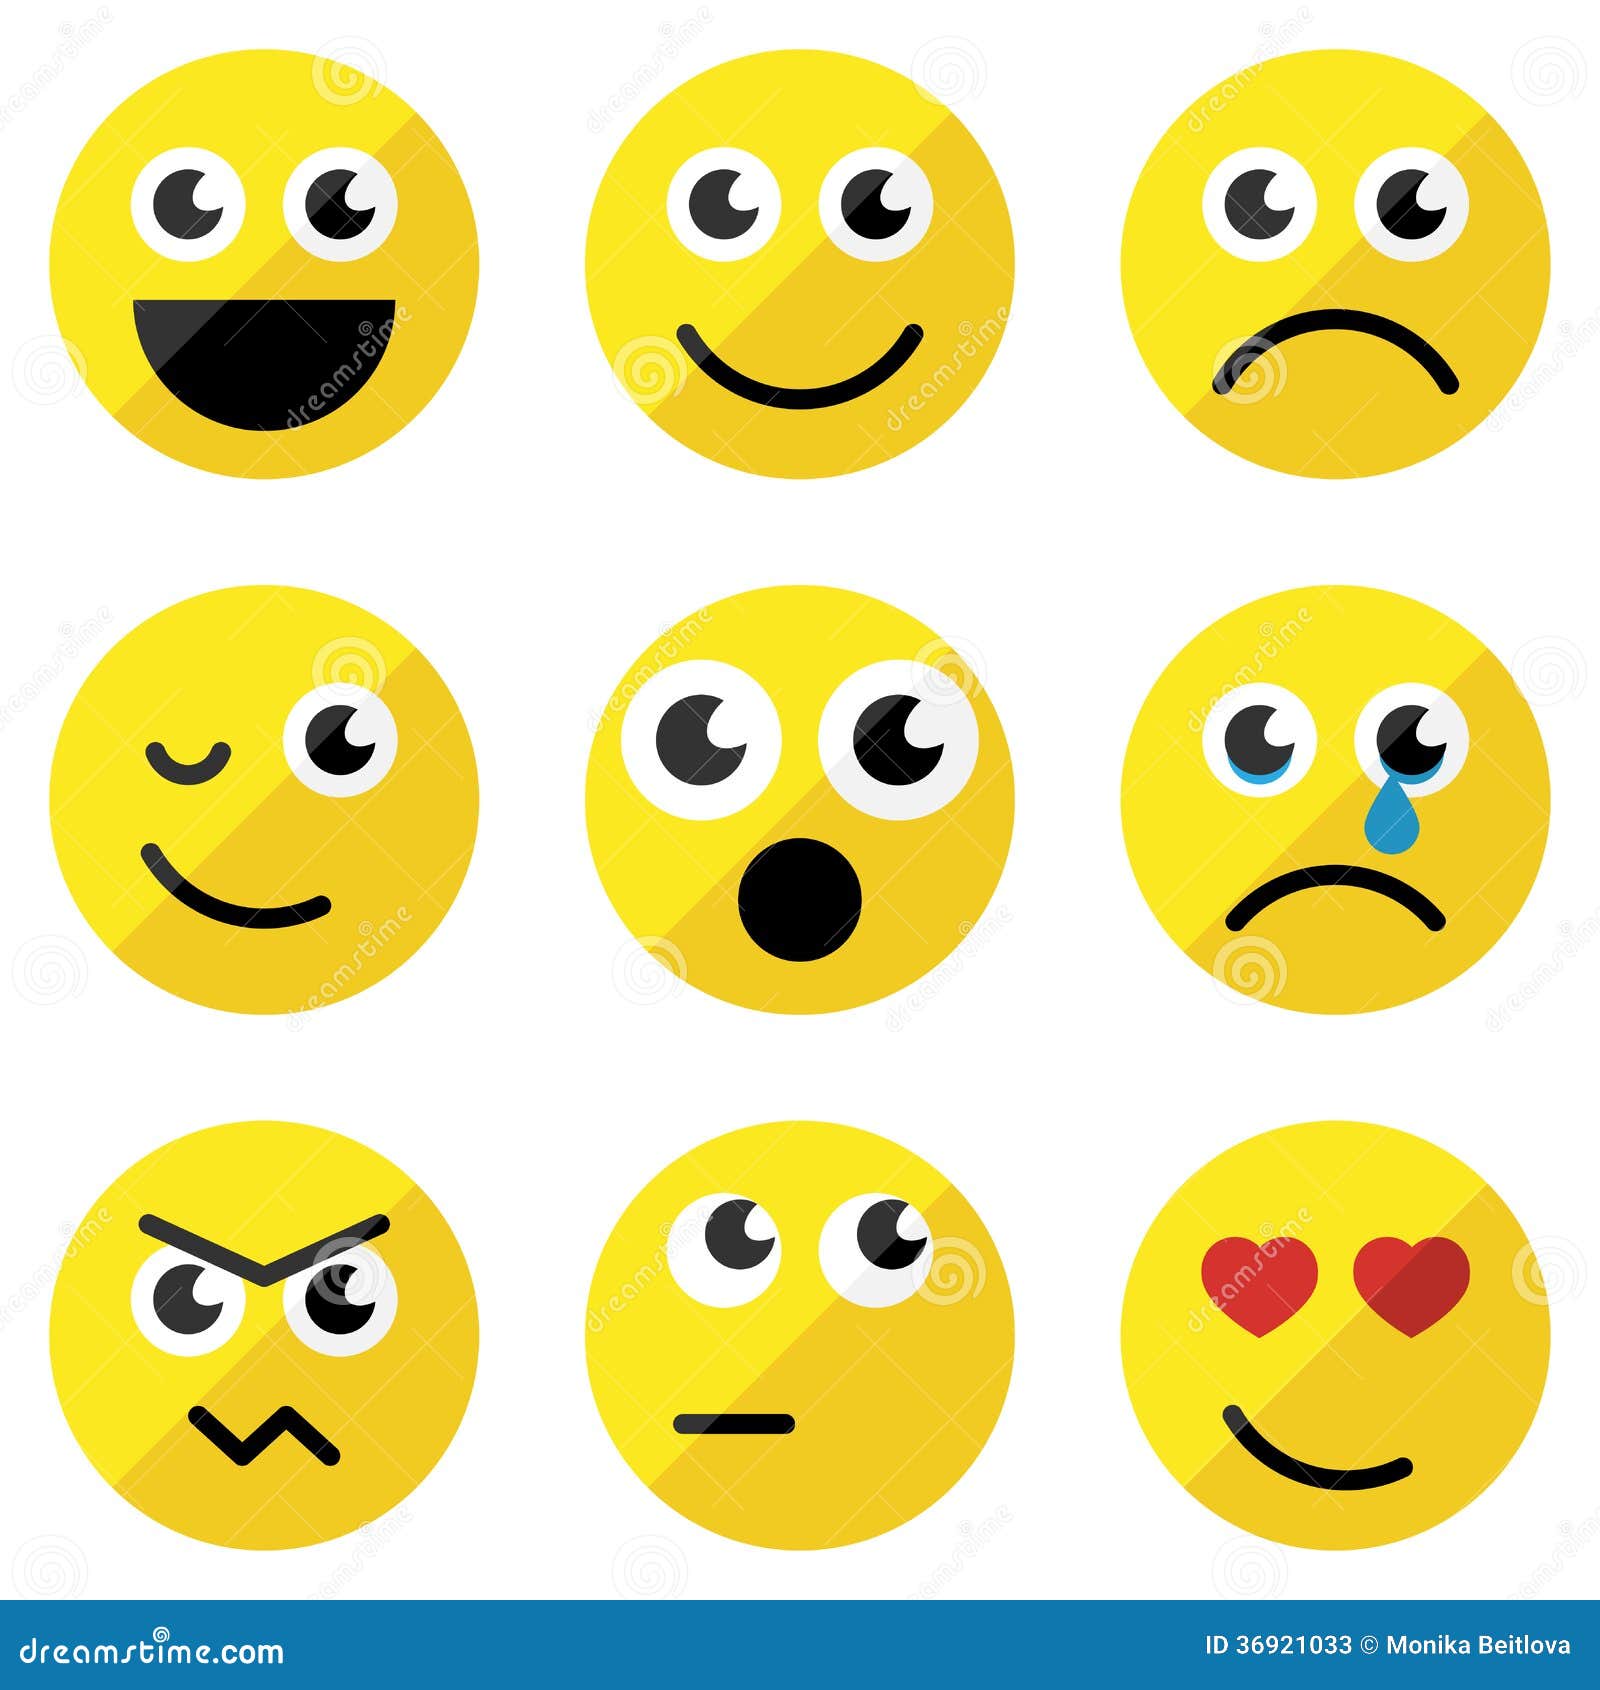 Basic Face Emojis Emoticons Emotions Flat Vector Illustration Symbols